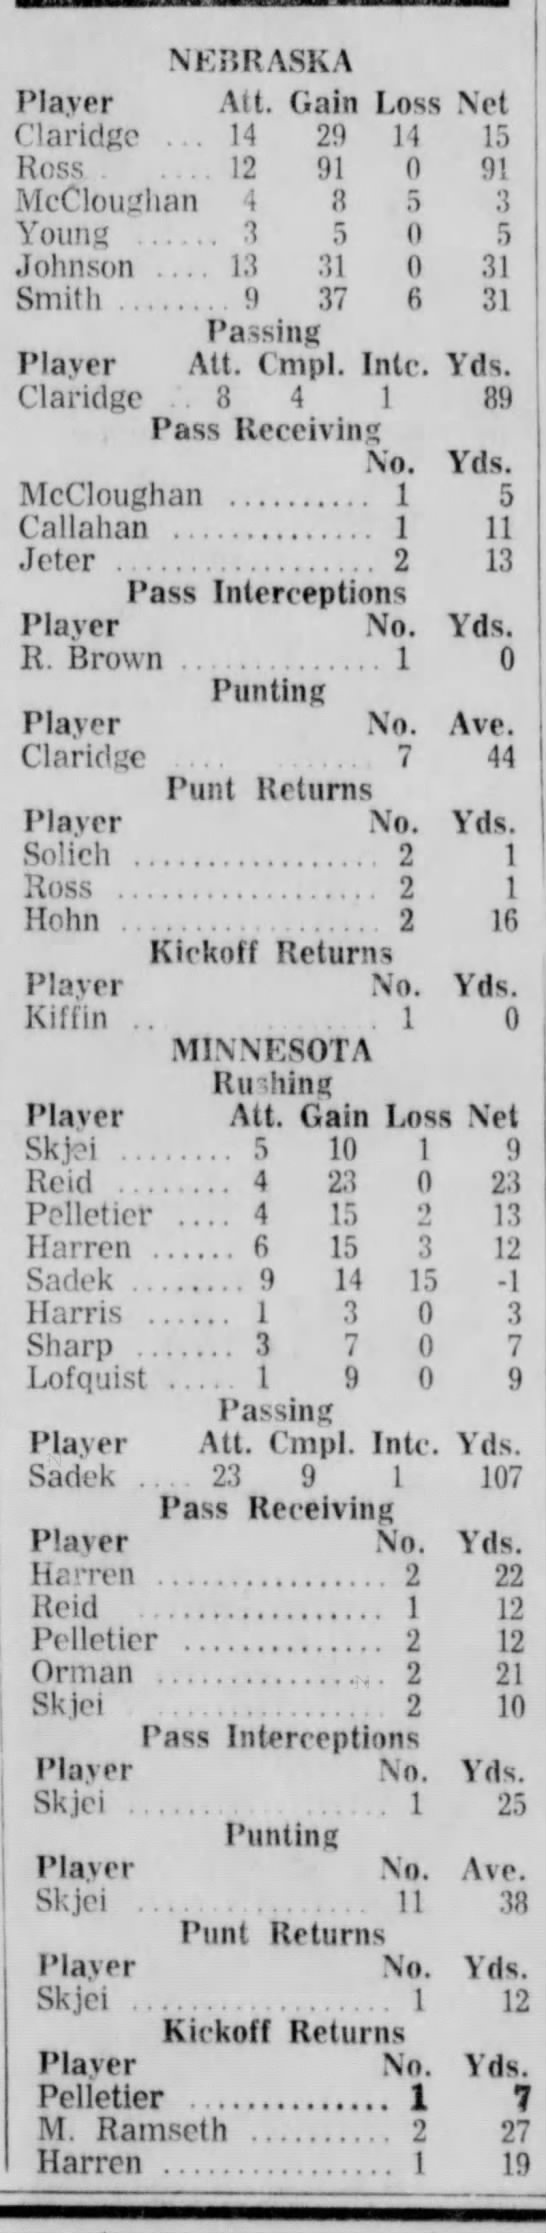 1963 Nebraska-Minnesota individual stats football - 